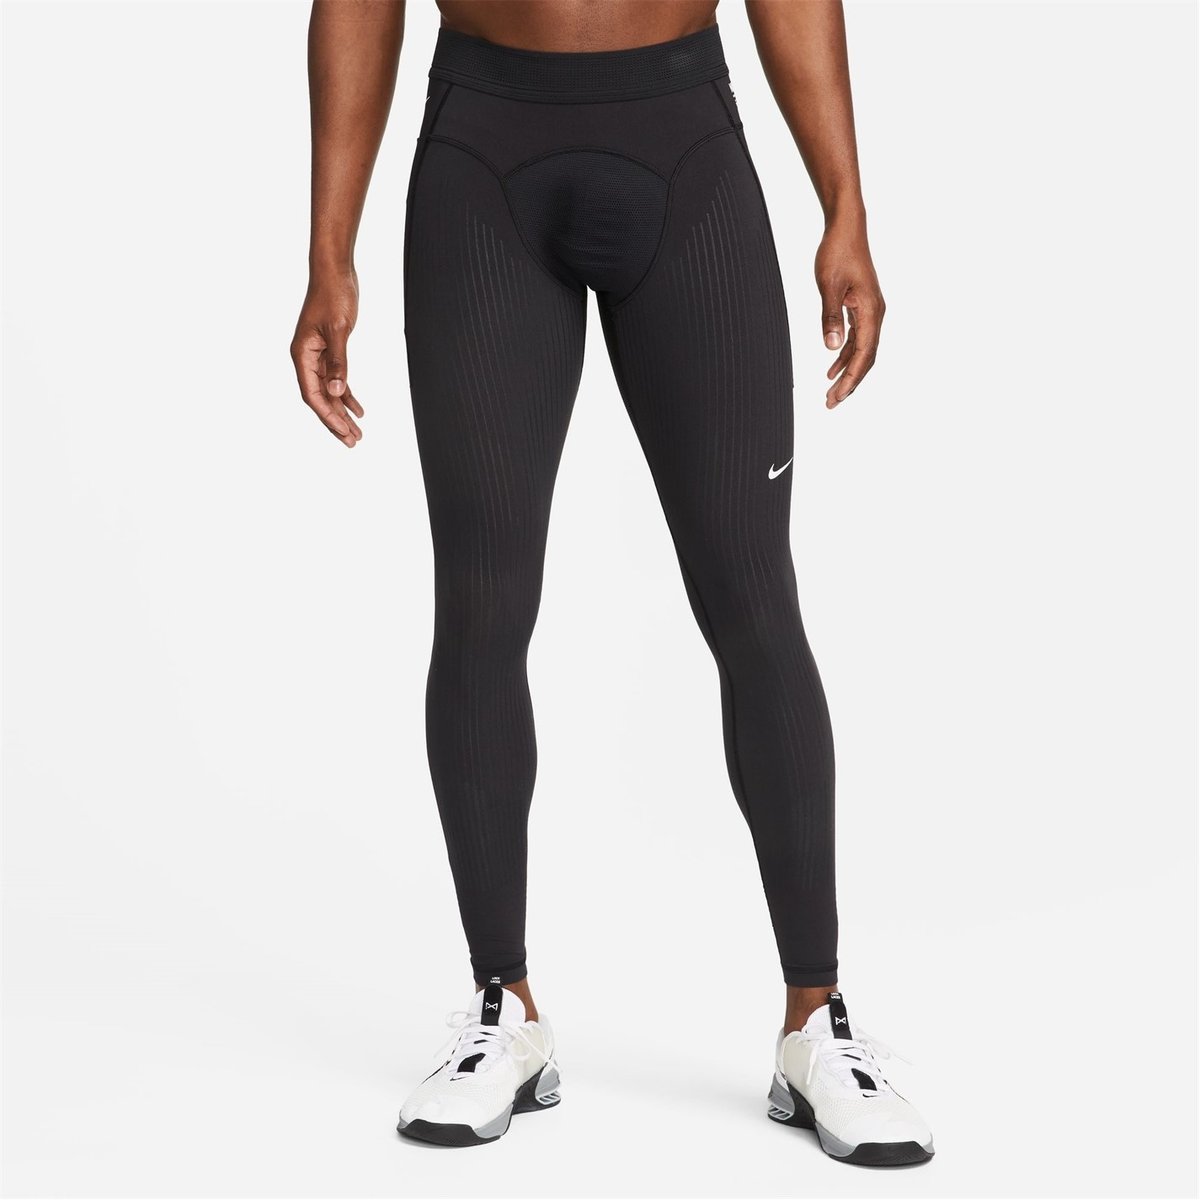 Nike Running Clothing - Lovell Sports